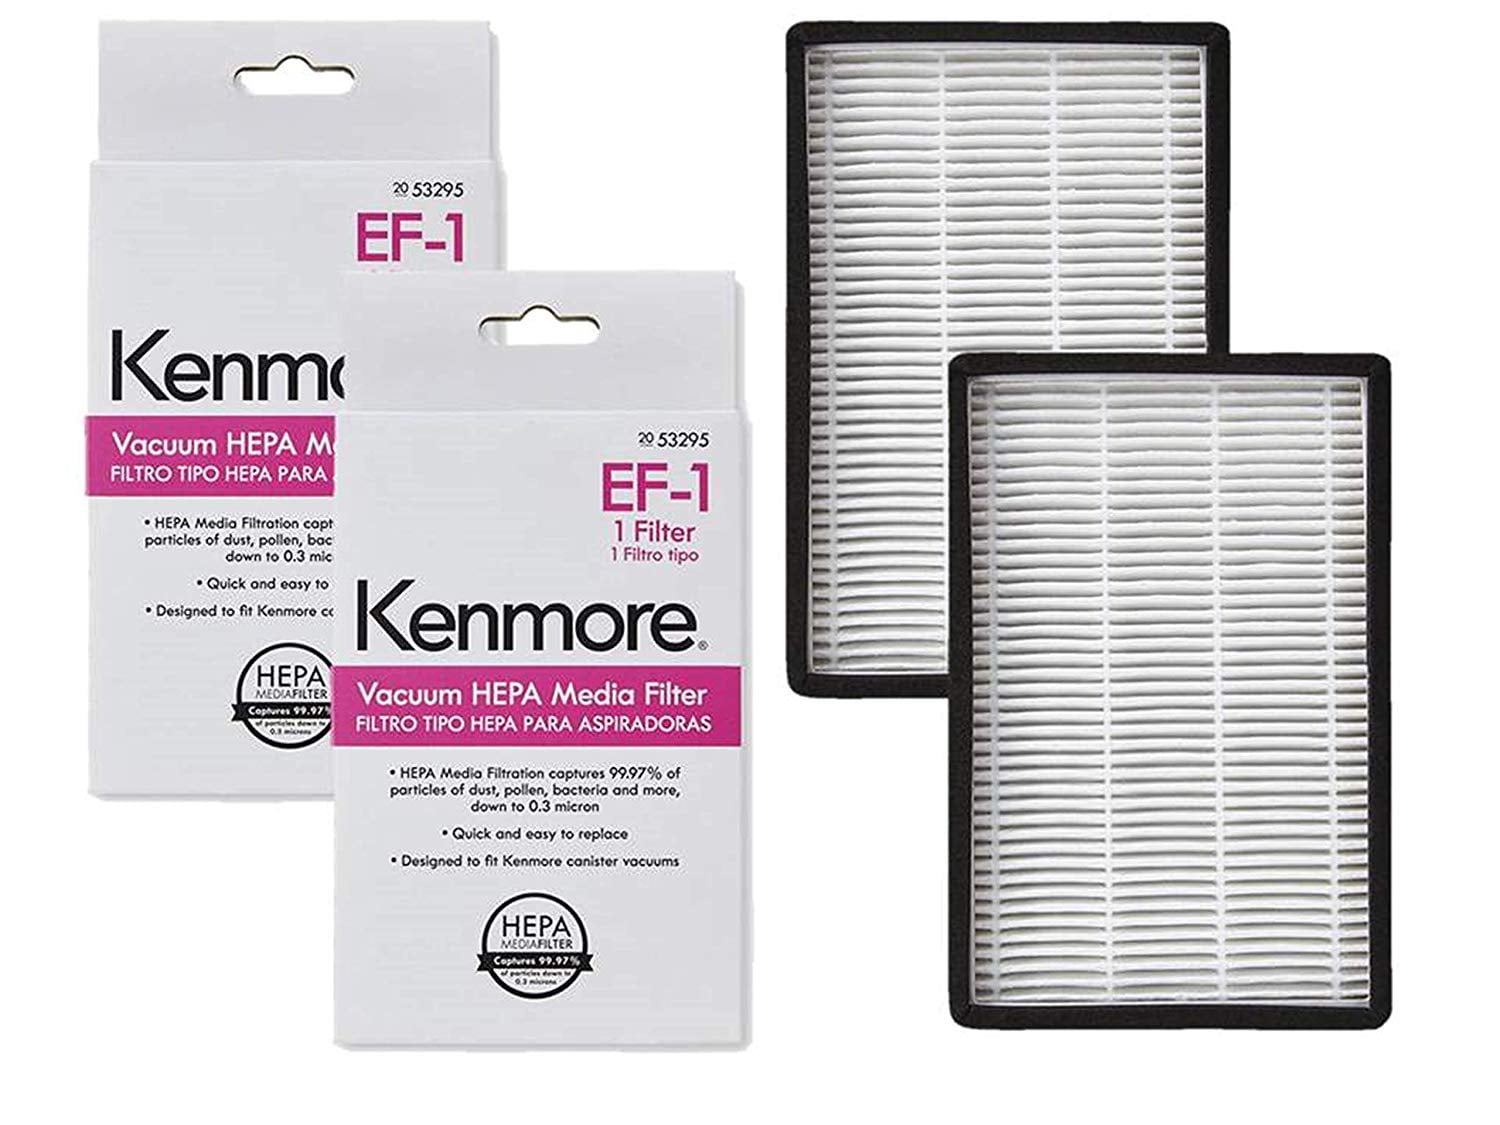 UltraCare Kenmore EF-3 HEPA Media Vac Filter Lot of 2 